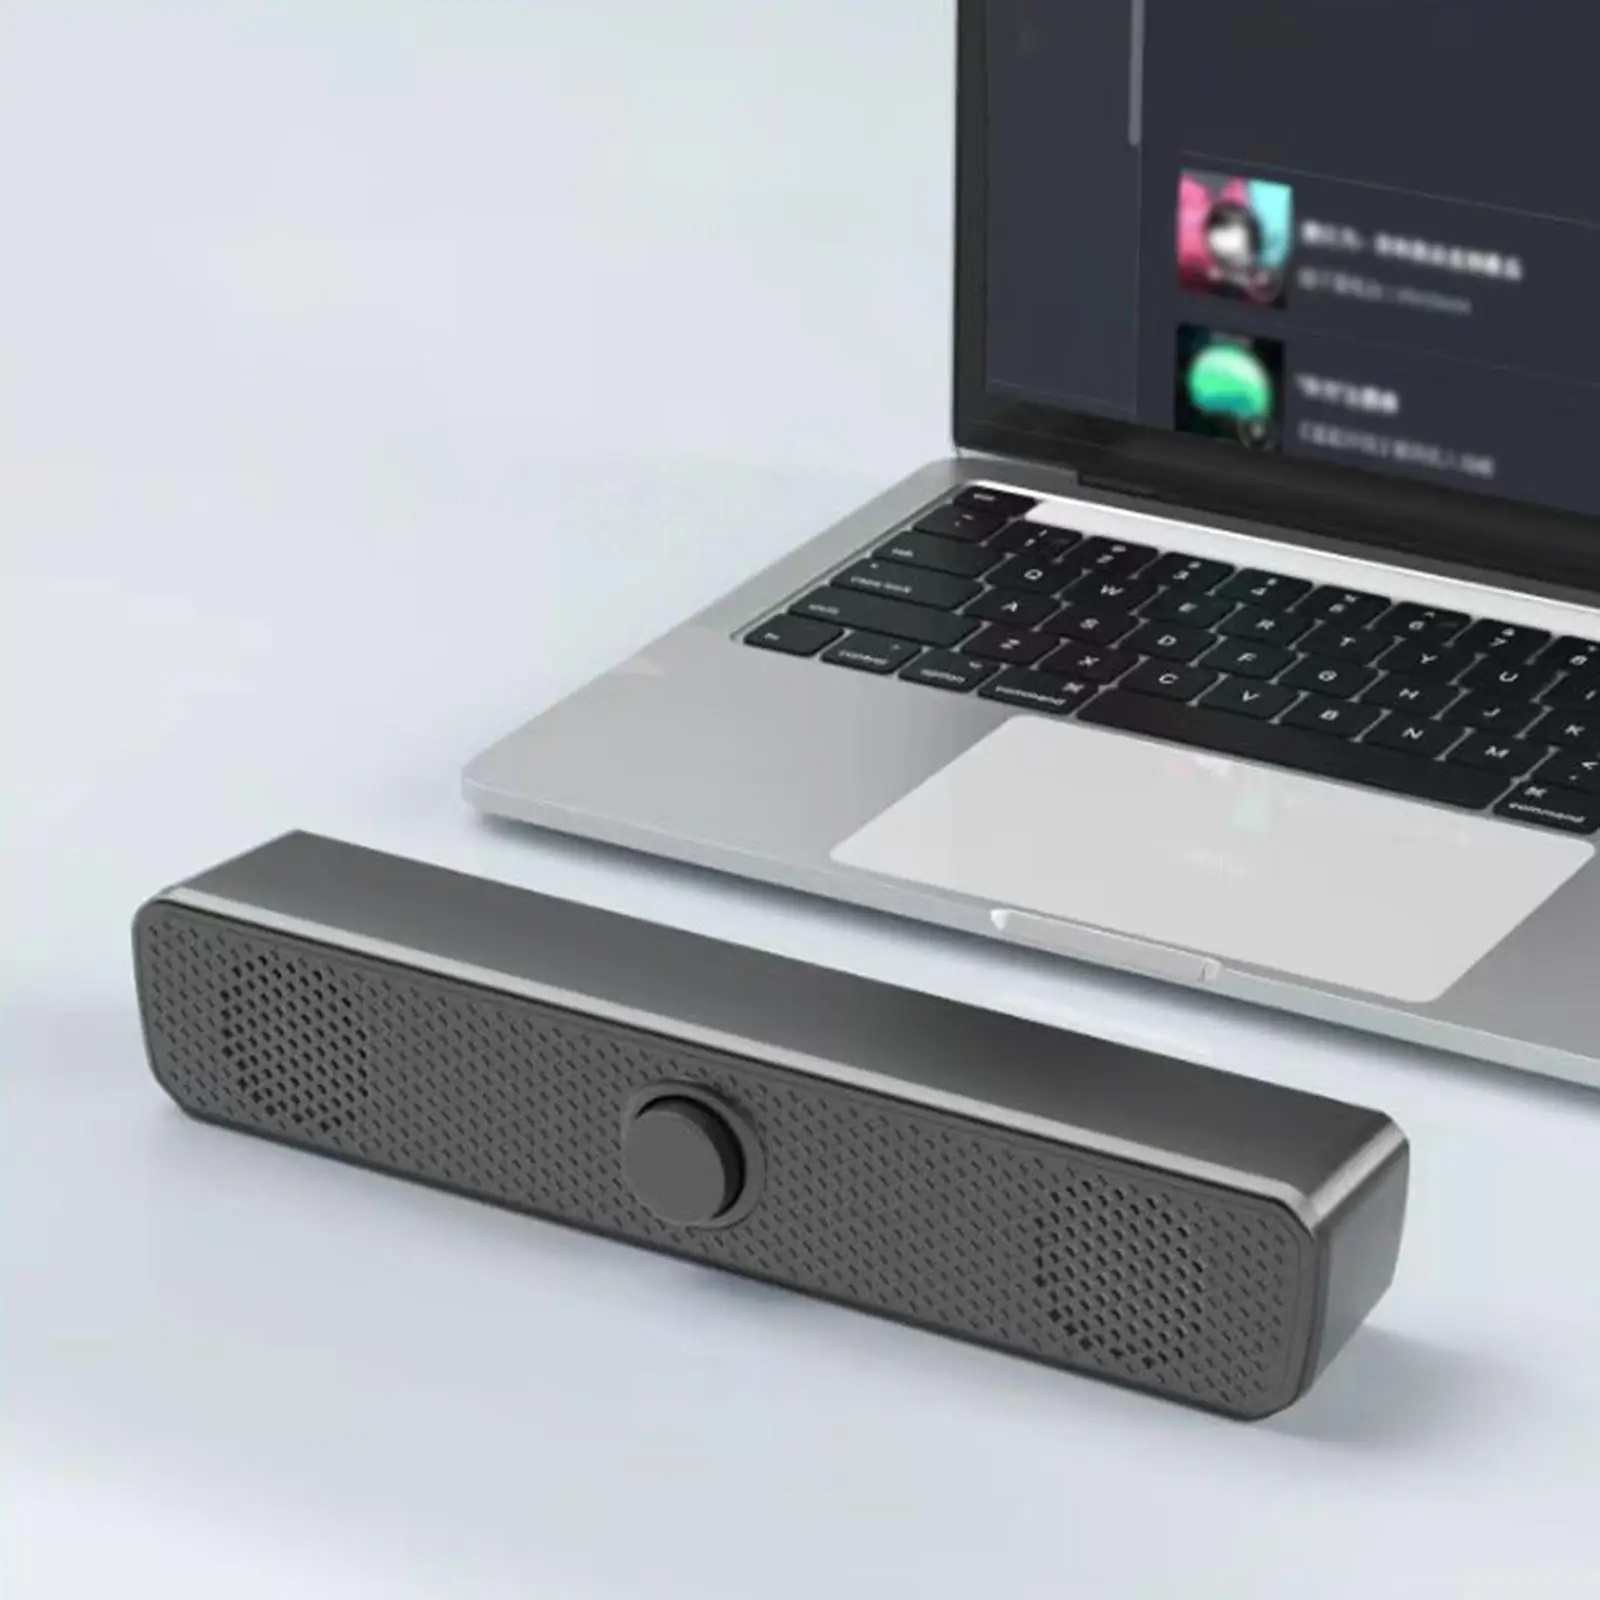 PC Speakers HiFi Sound Surround Sound 3.5mm Audio DC 5V Computer Sound Bar PC Soundbar for Notebook Laptops Phones Pcs